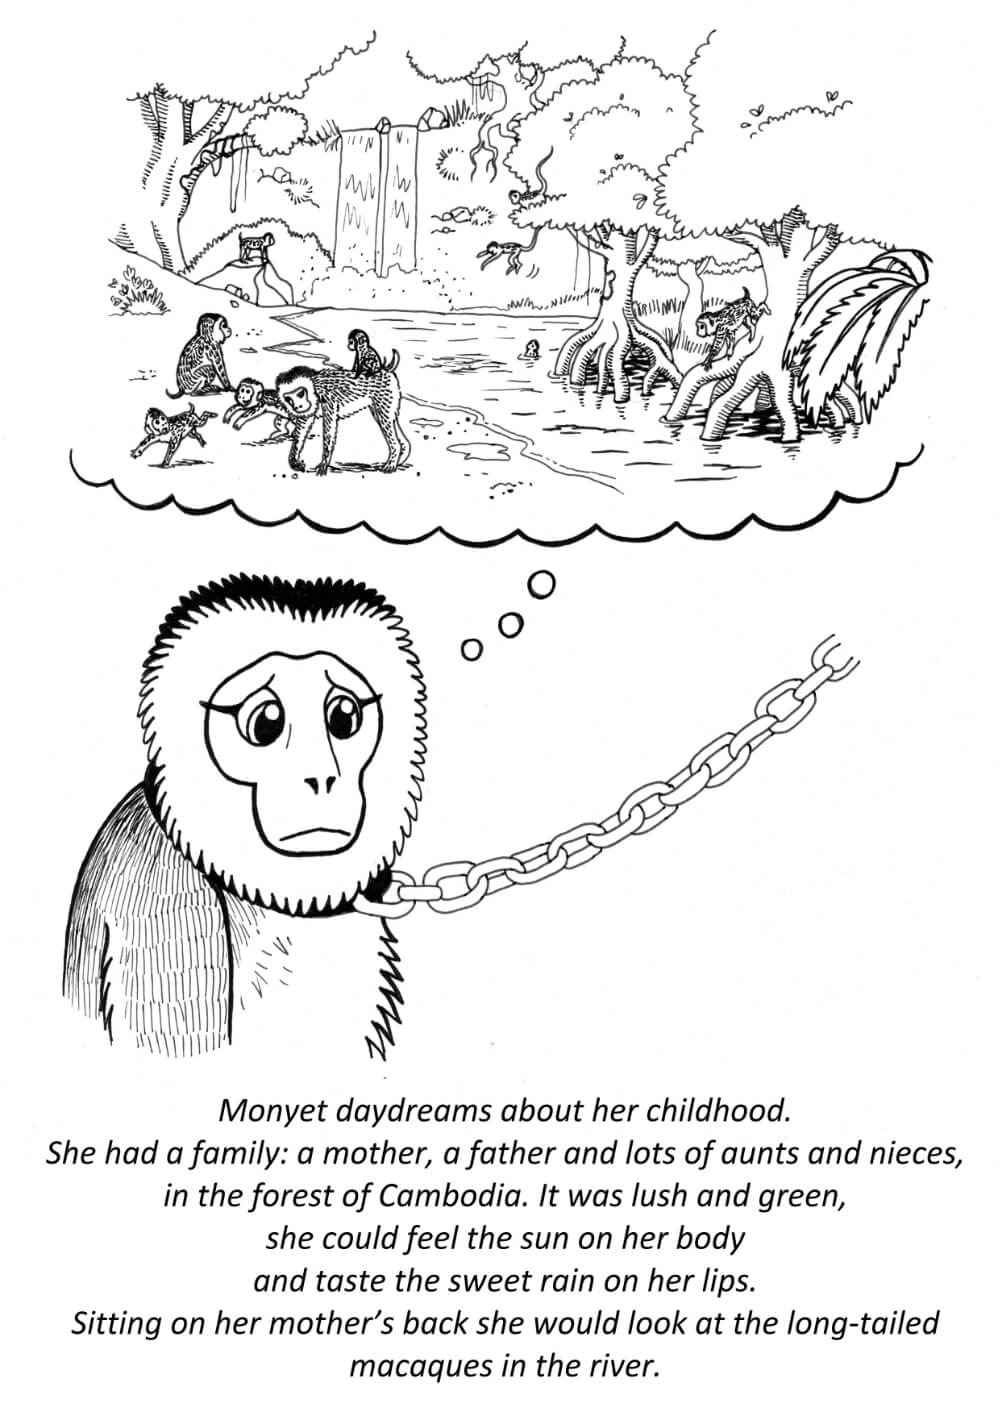 Tails of Cambodia - Primate conservation education book - Copyright Brenda de Groot